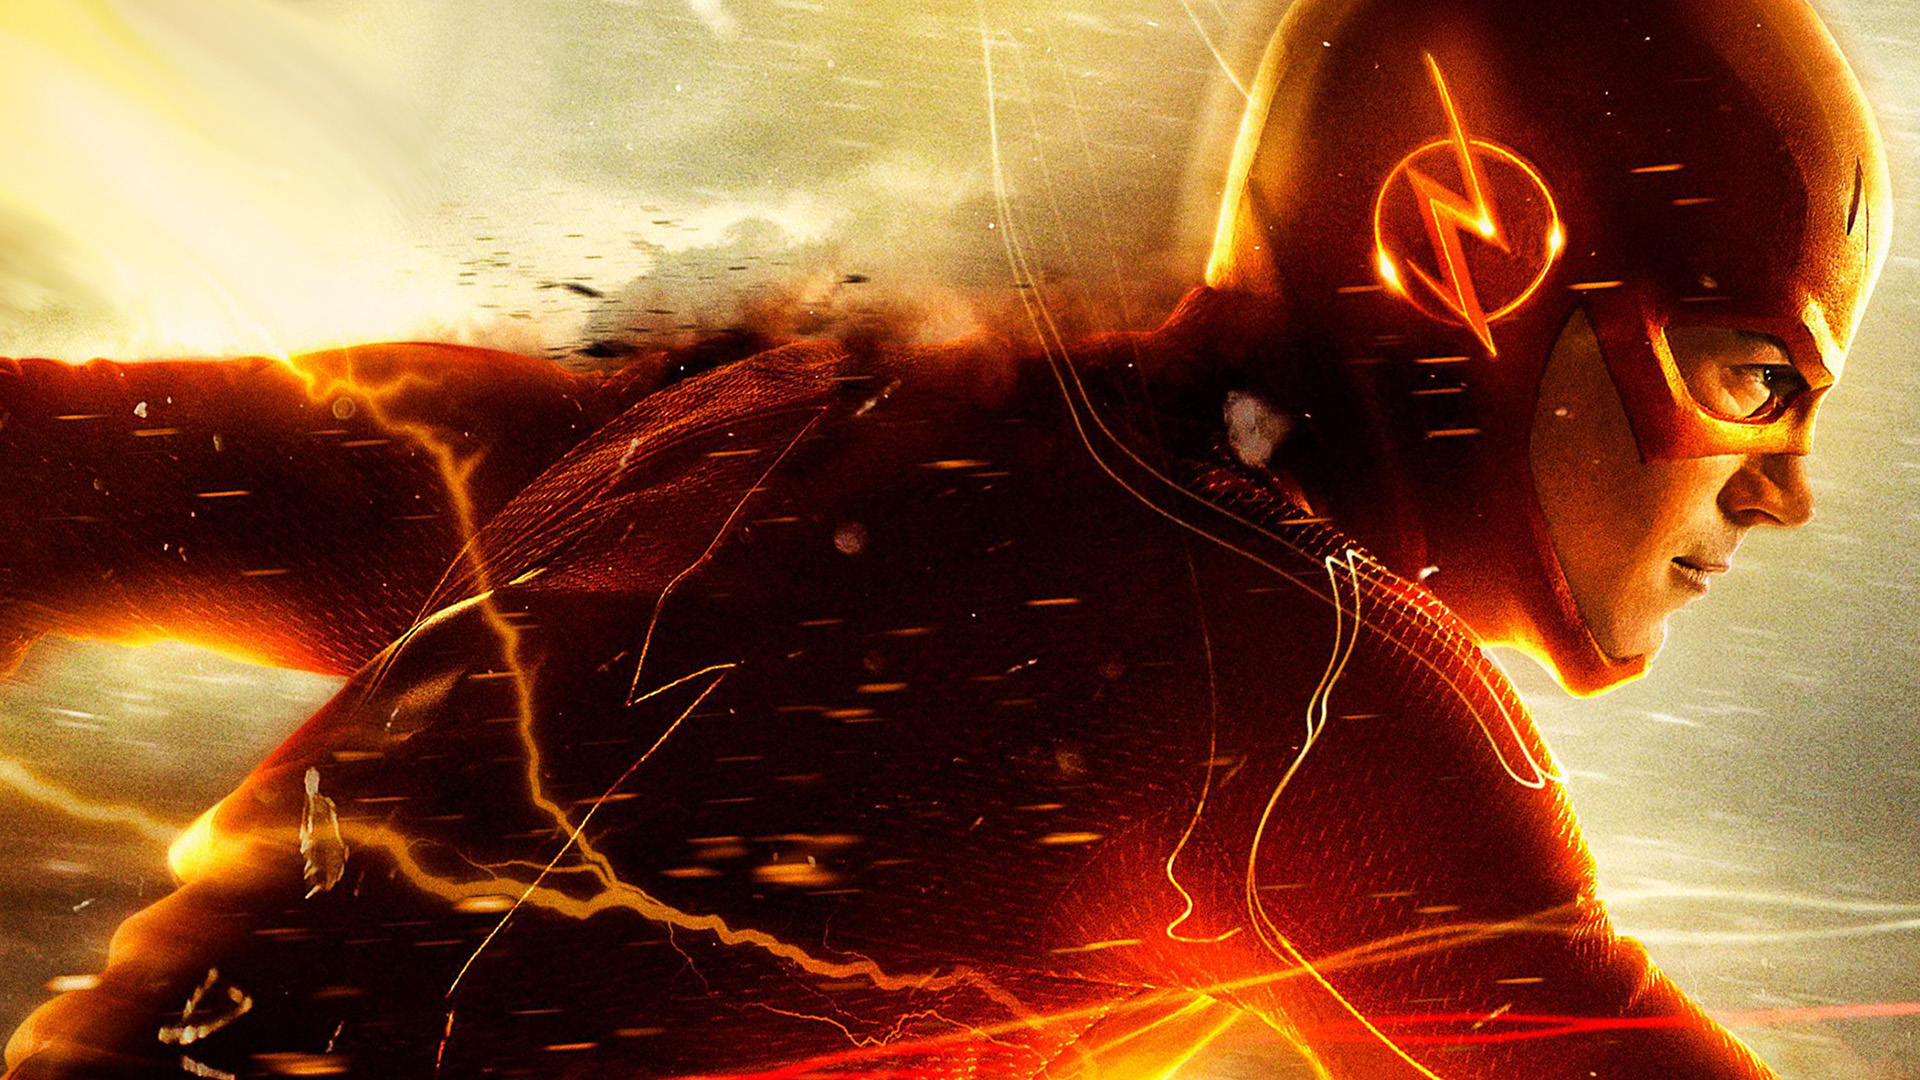 The Flash (2014) Backgrounds, Compatible - PC, Mobile, Gadgets| 1920x1080 px